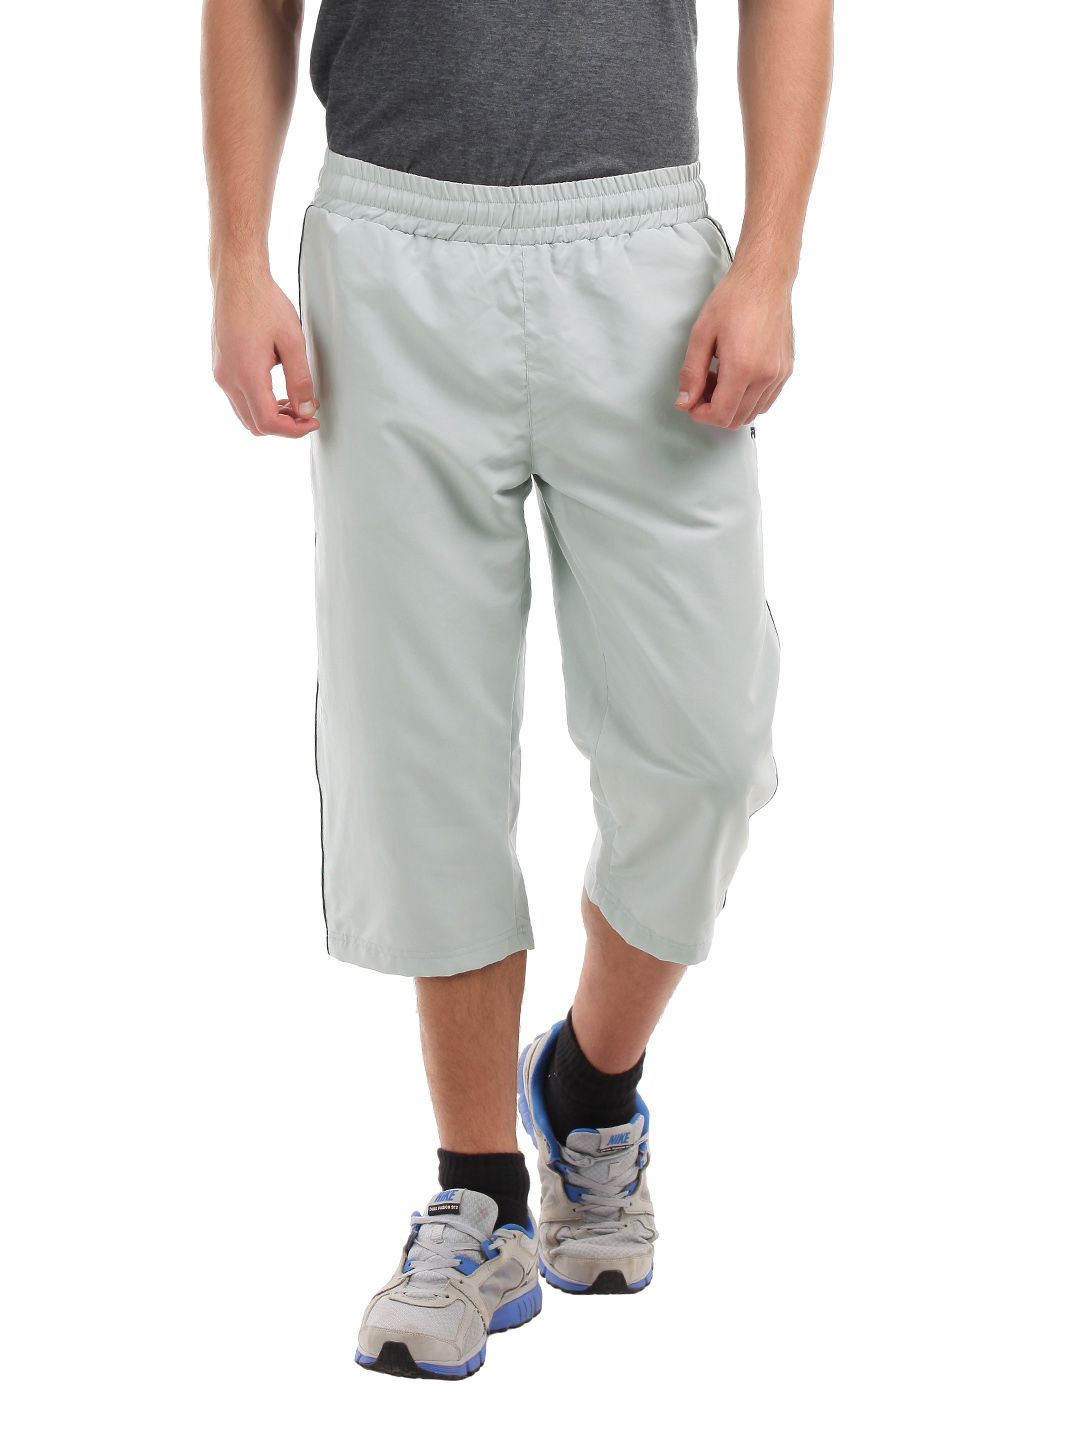 Buy Fila Men Grey & White 3/4 Length Pants - 293 - Apparel for Men - 86182